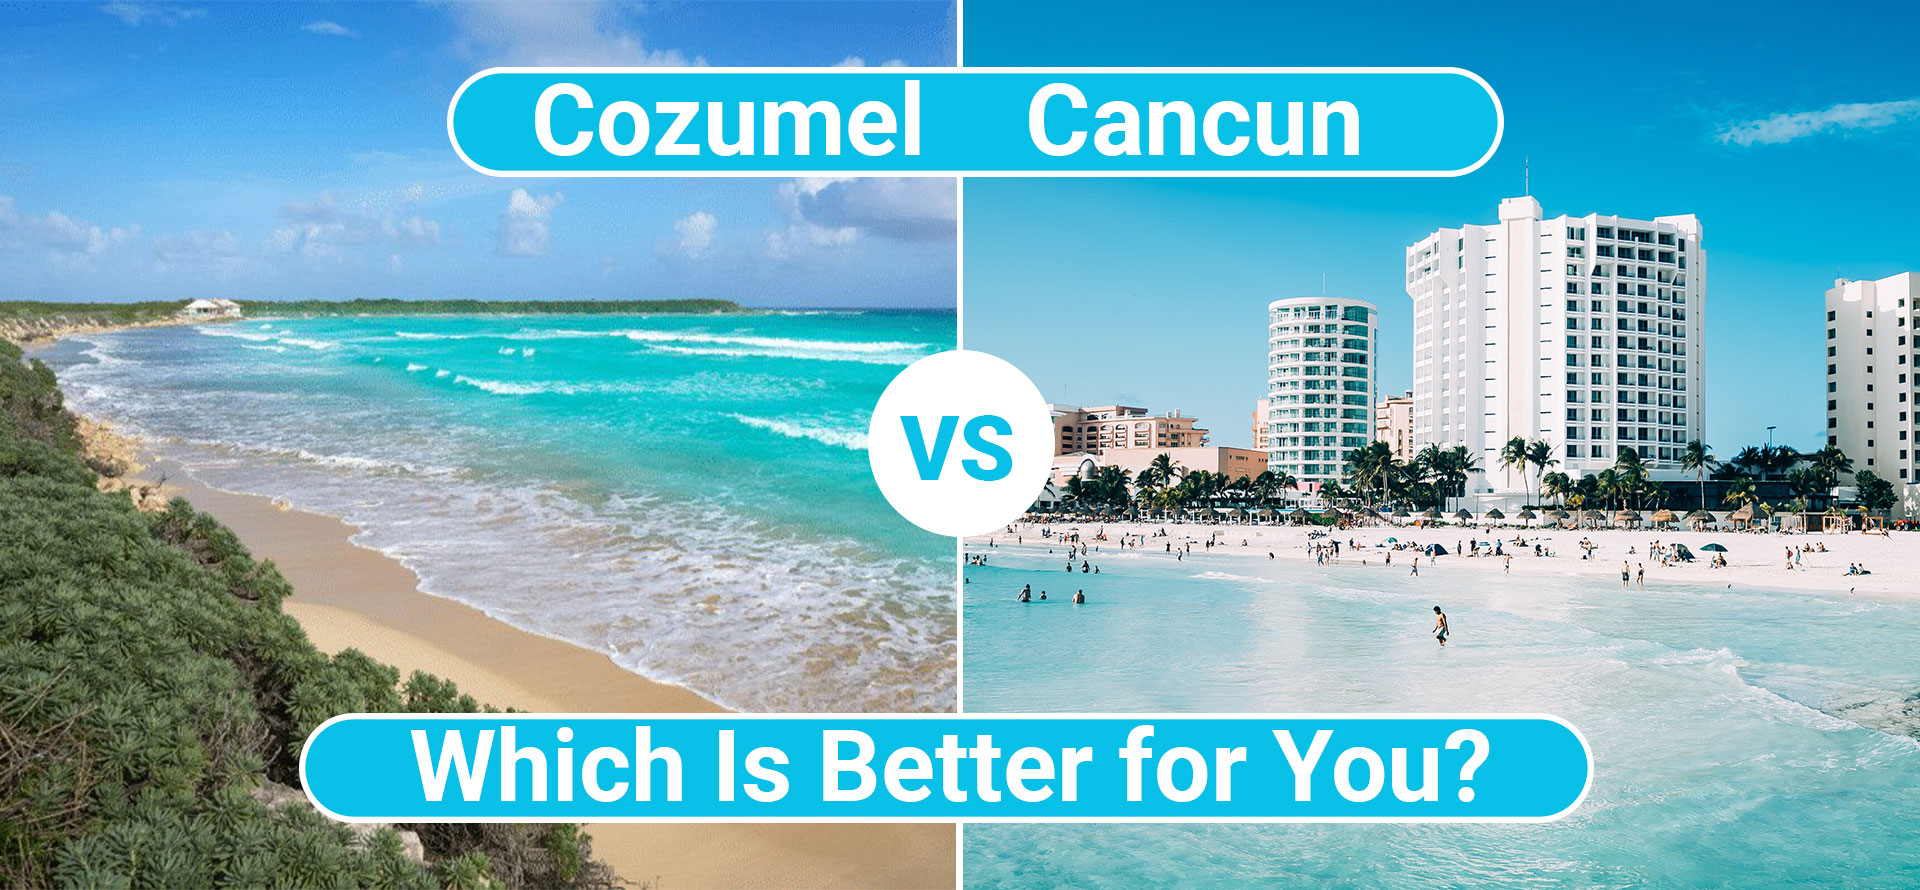 Cozumel vs cancun.